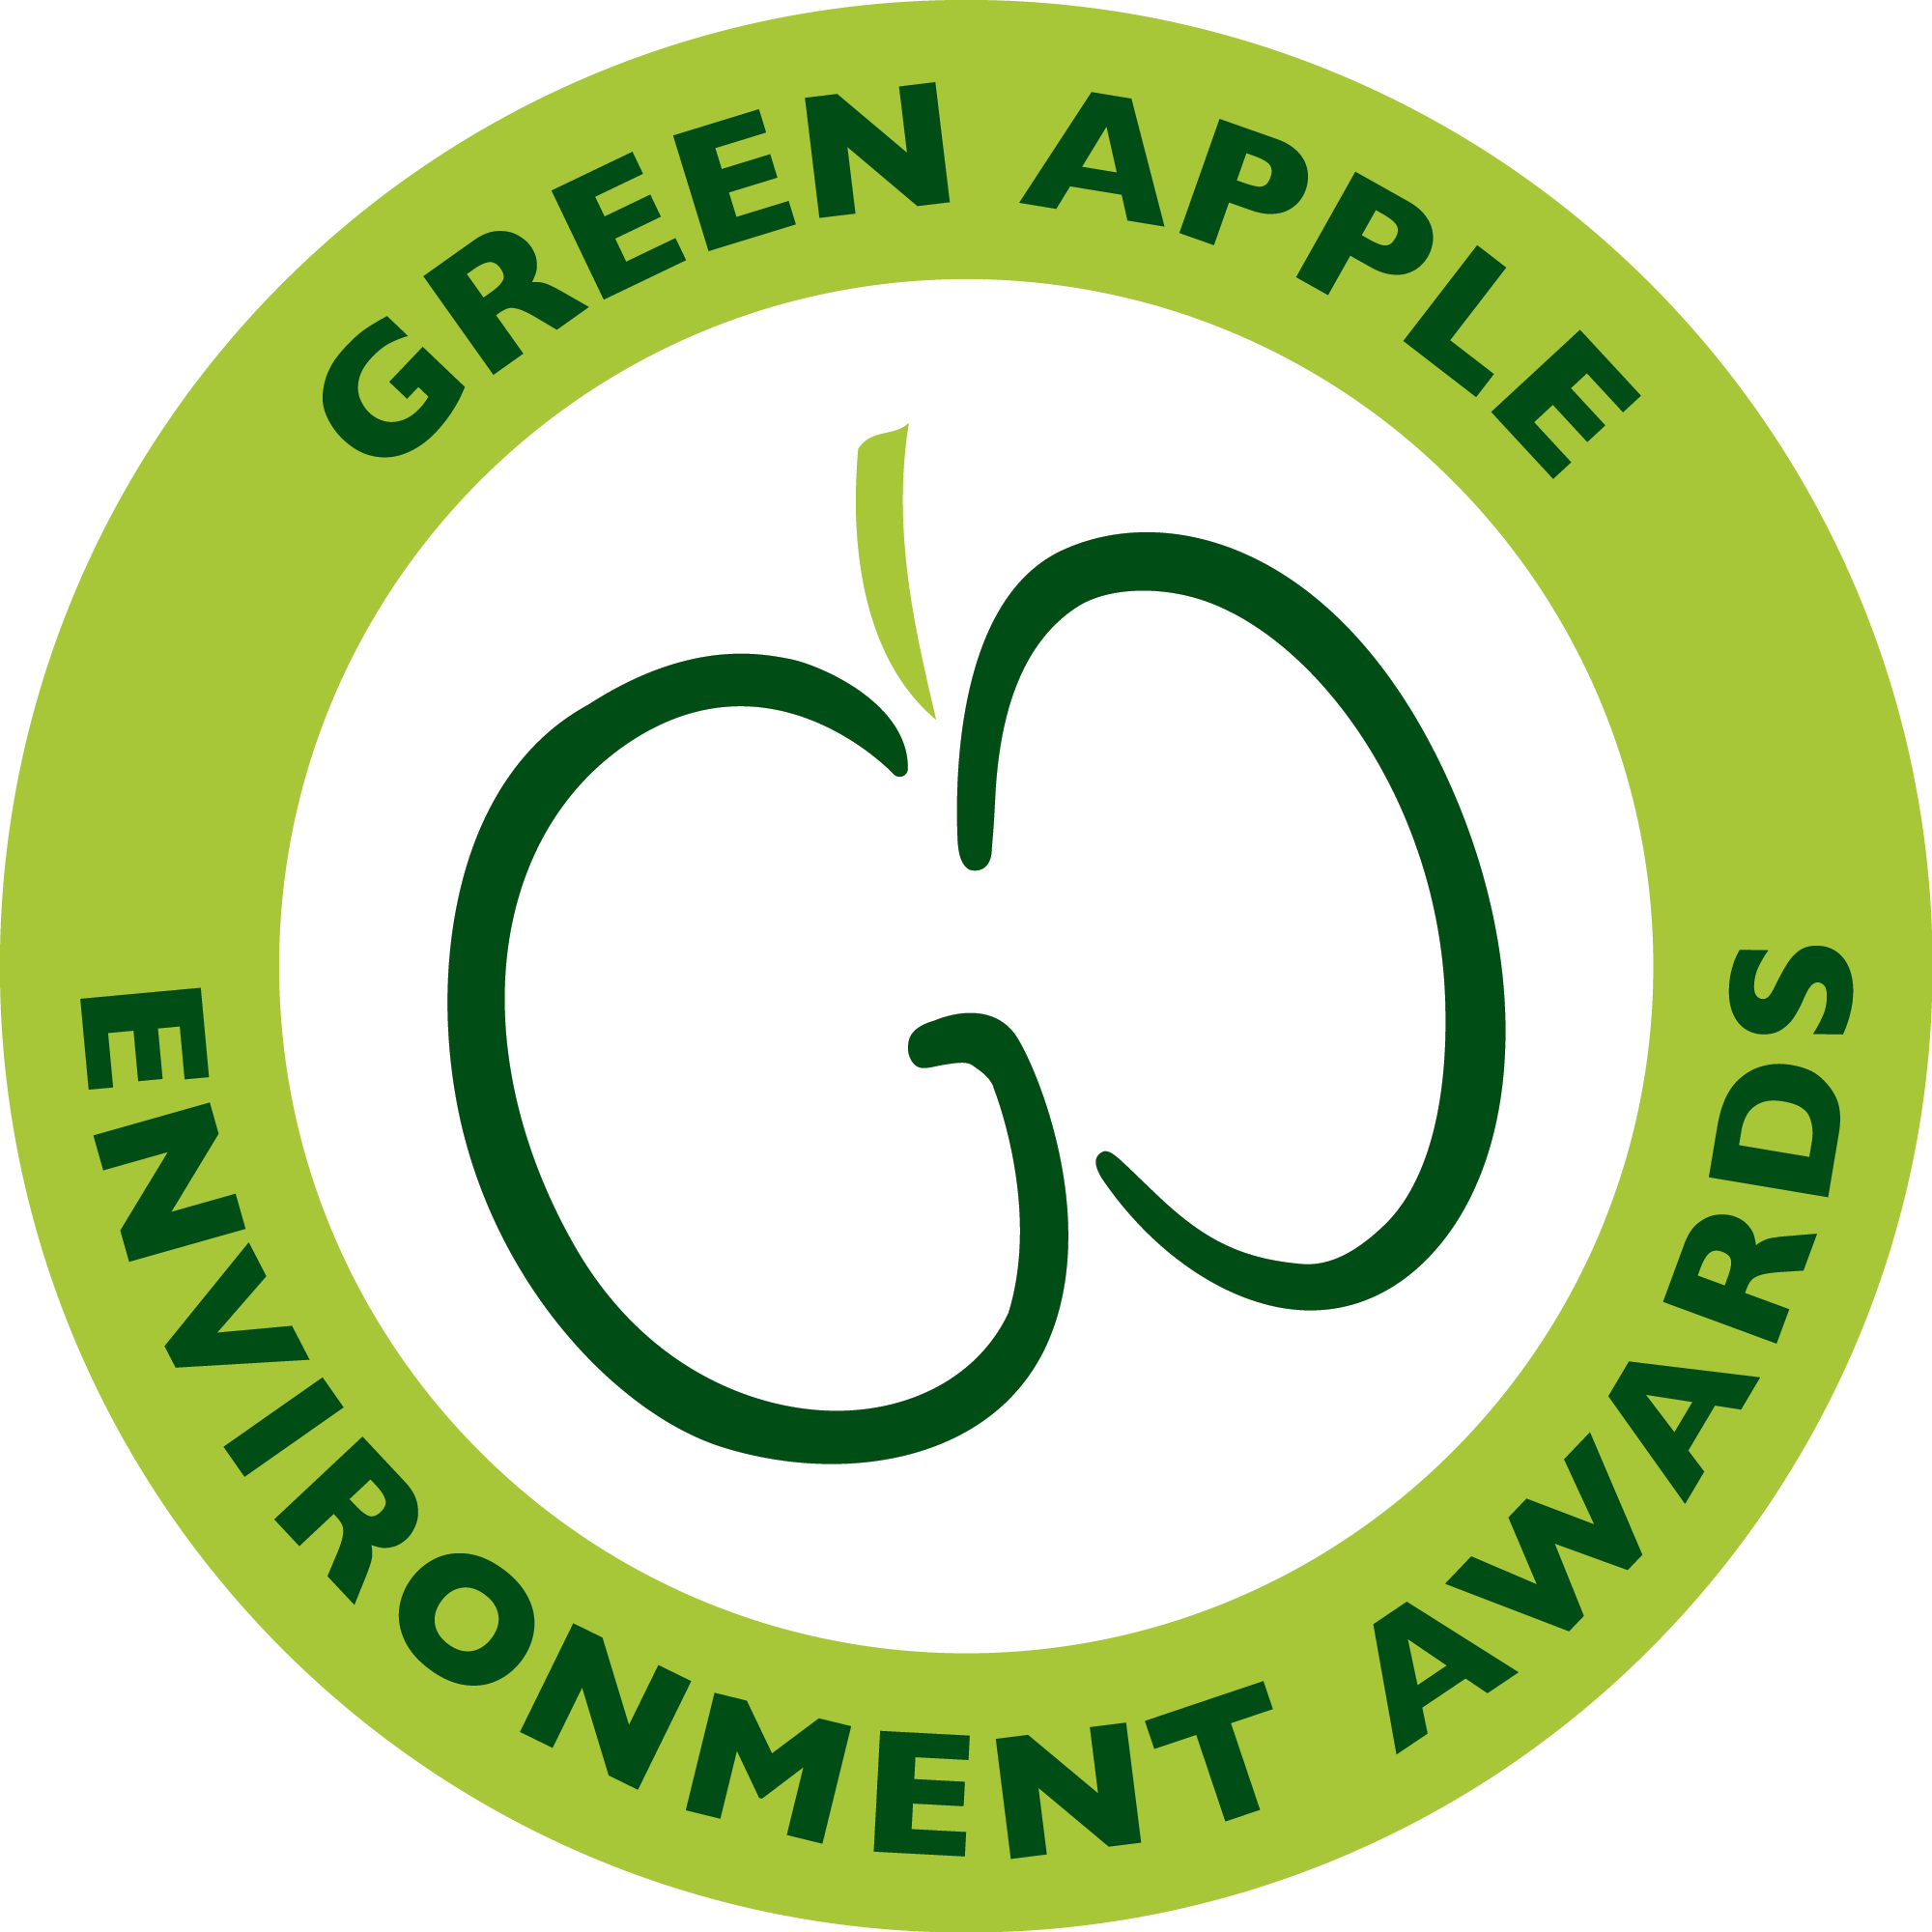 GA Environment awards